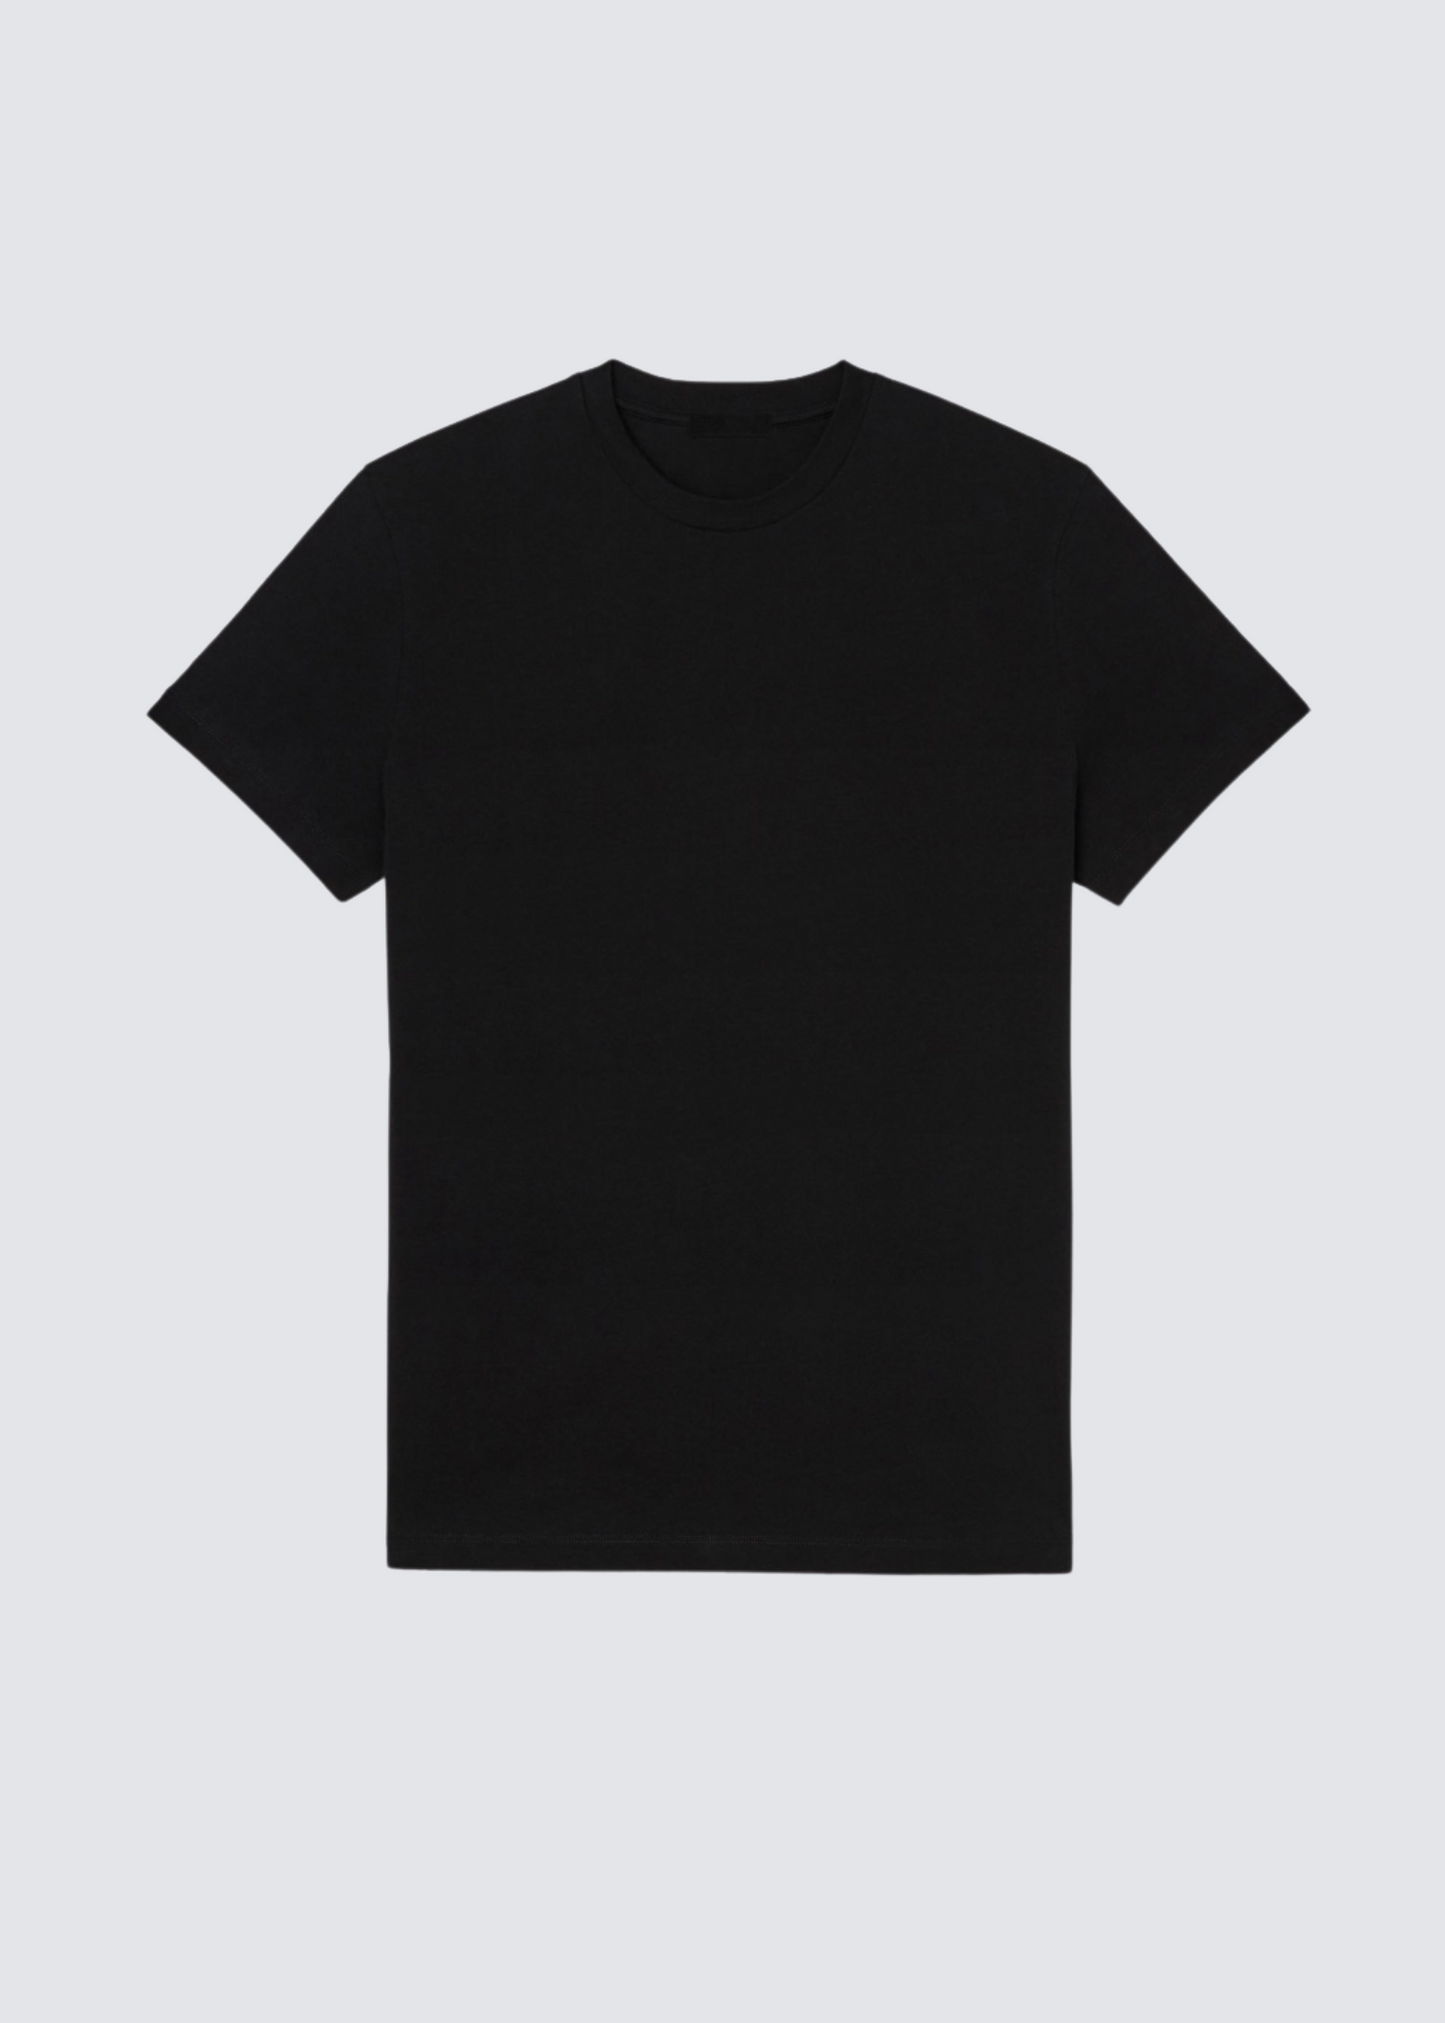 Classic, Black, T-Shirt